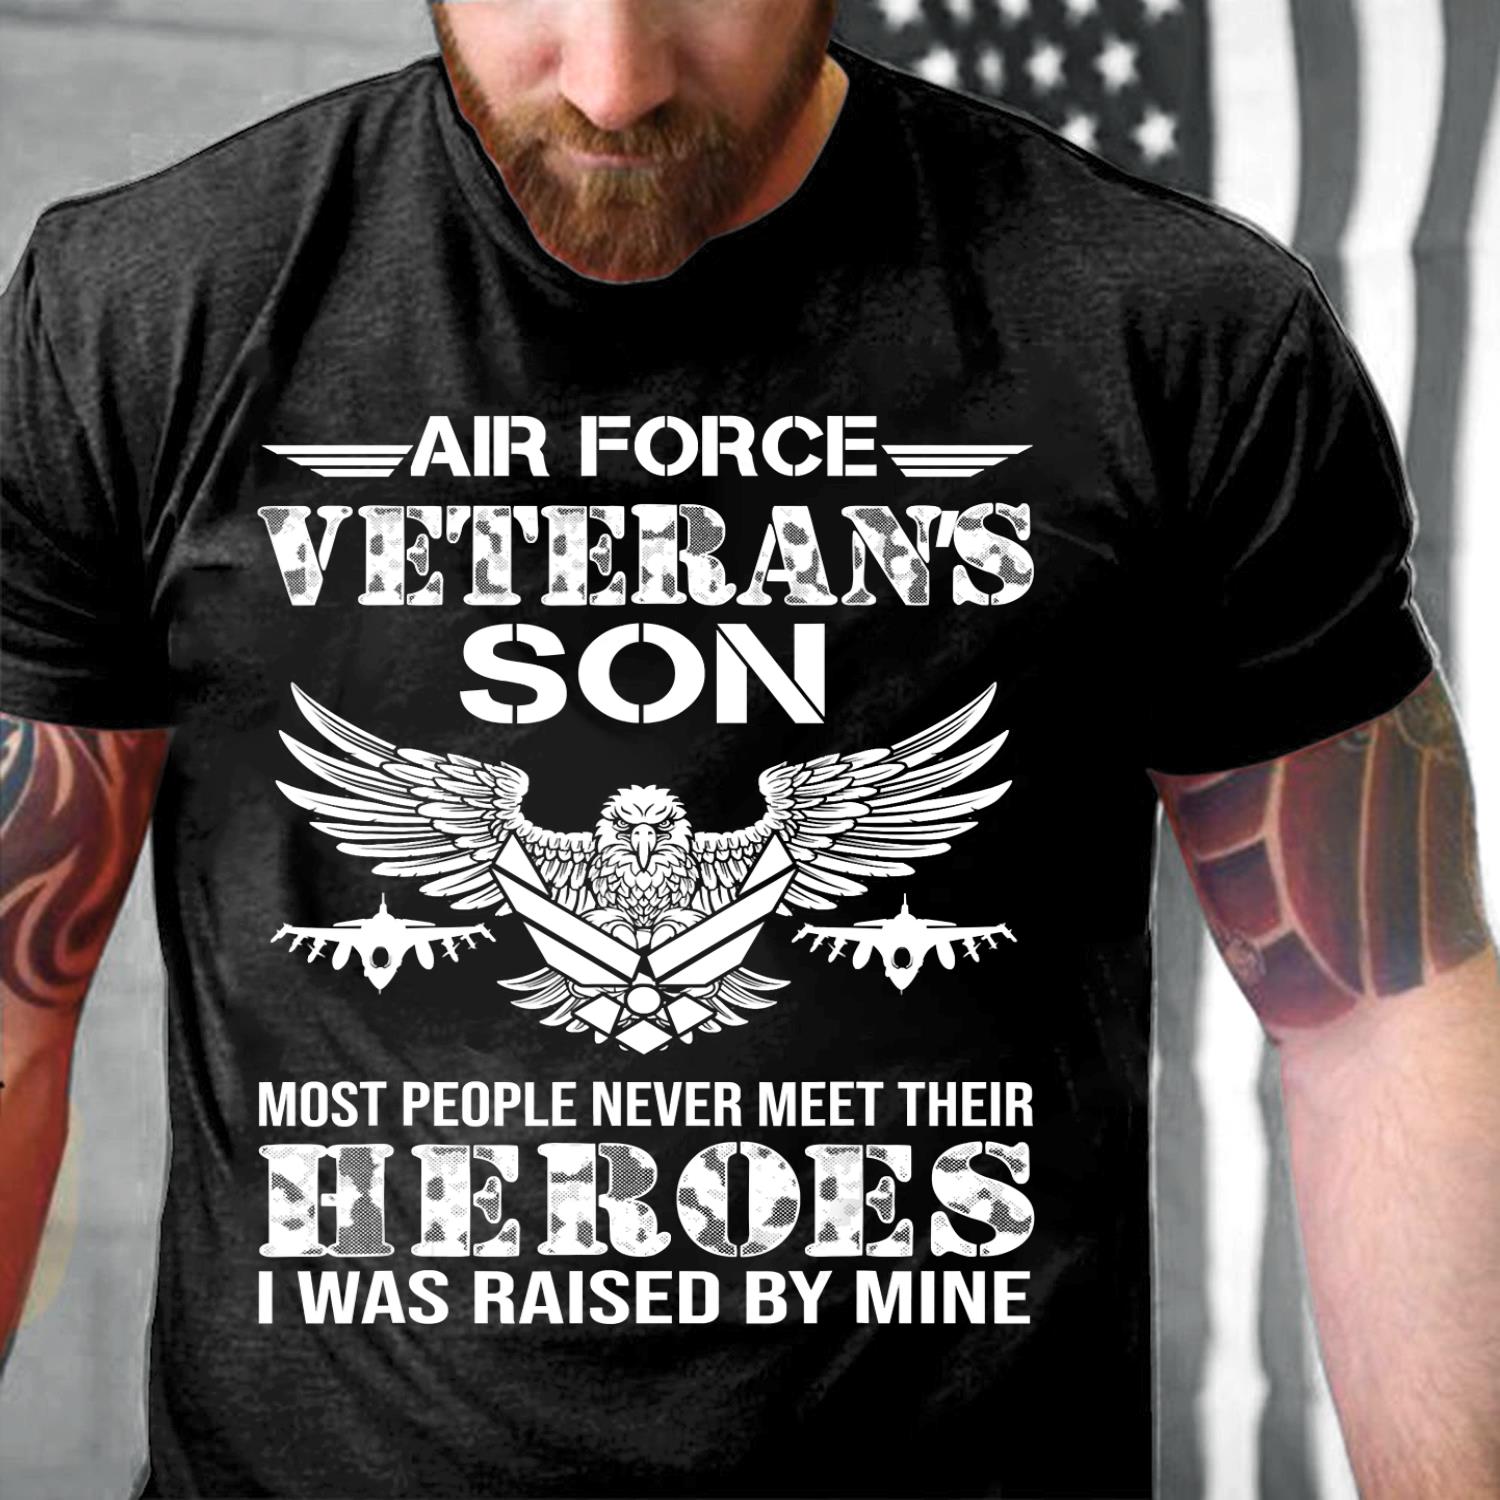 Air Force Veteran's Son, USAF T-Shirt, Veteran's Day Gift T-Shirt